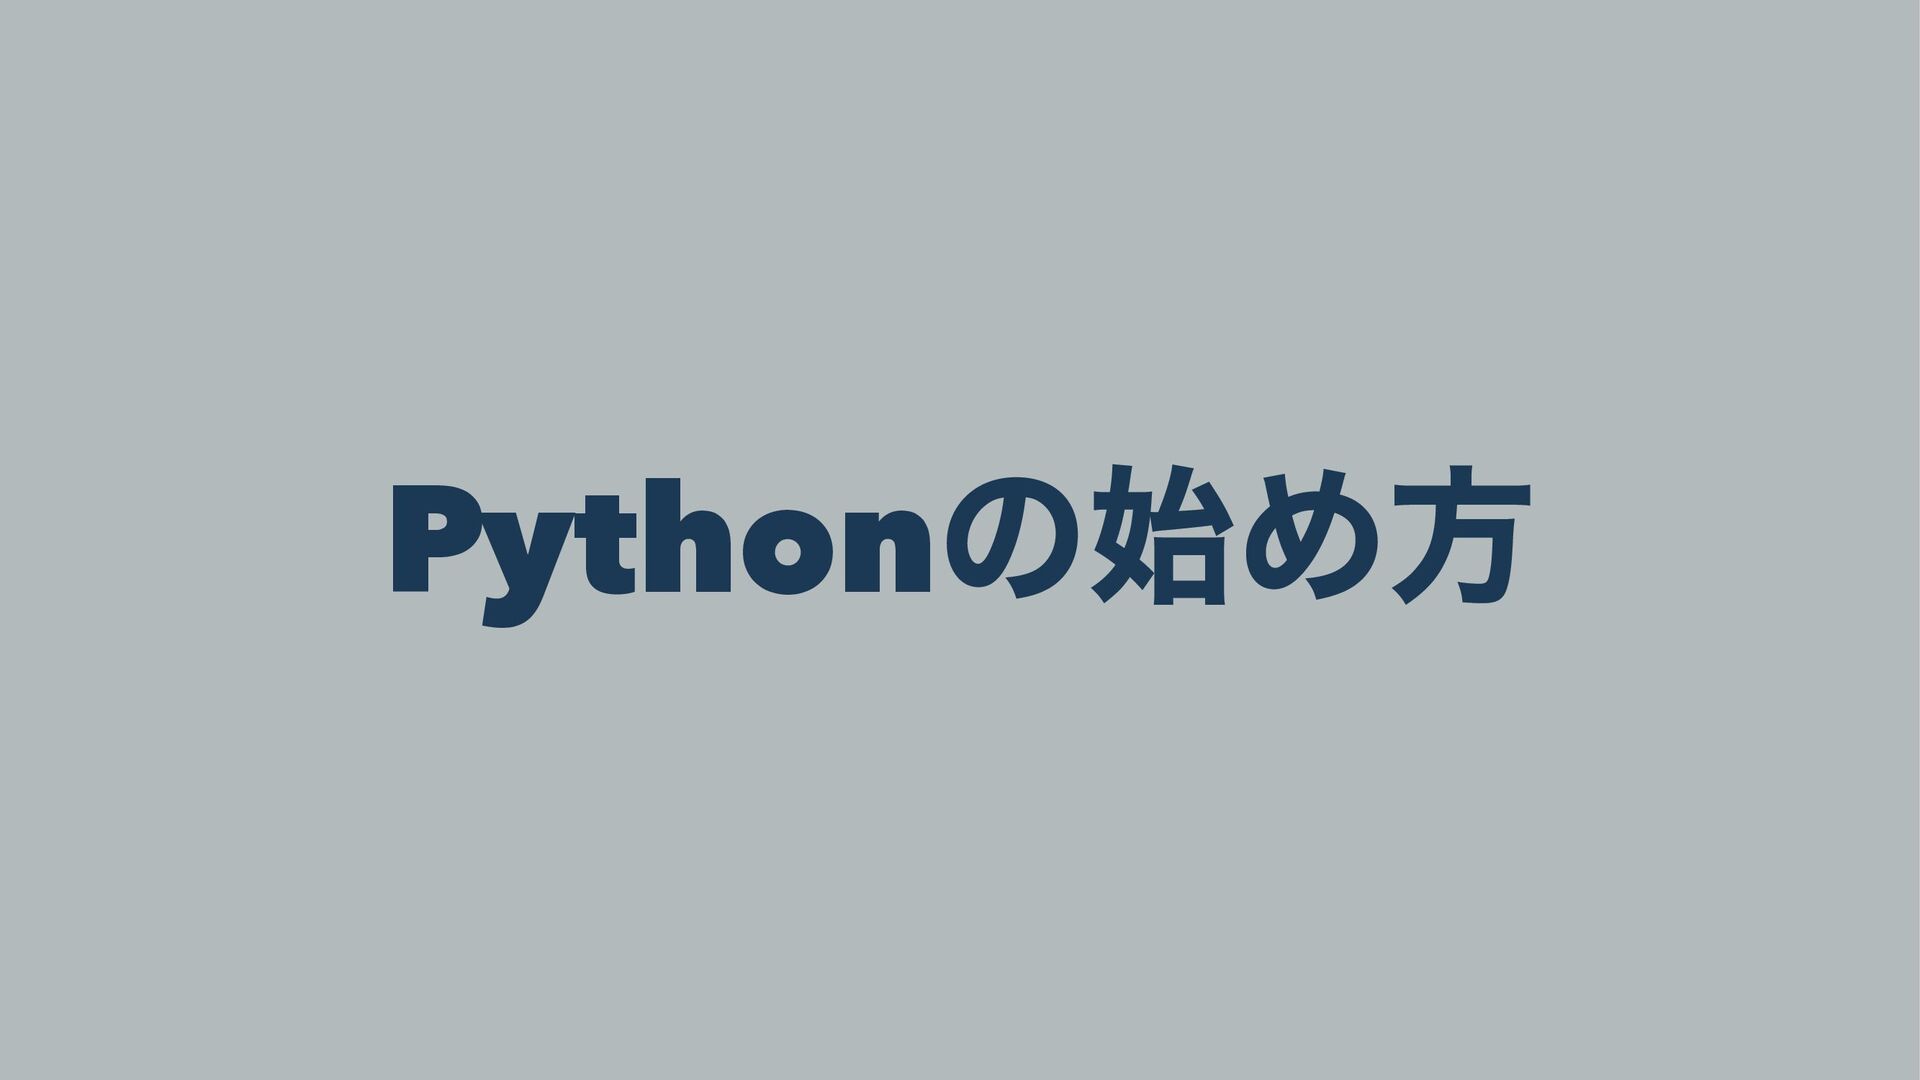 Pythonの始め方 / Starting Python